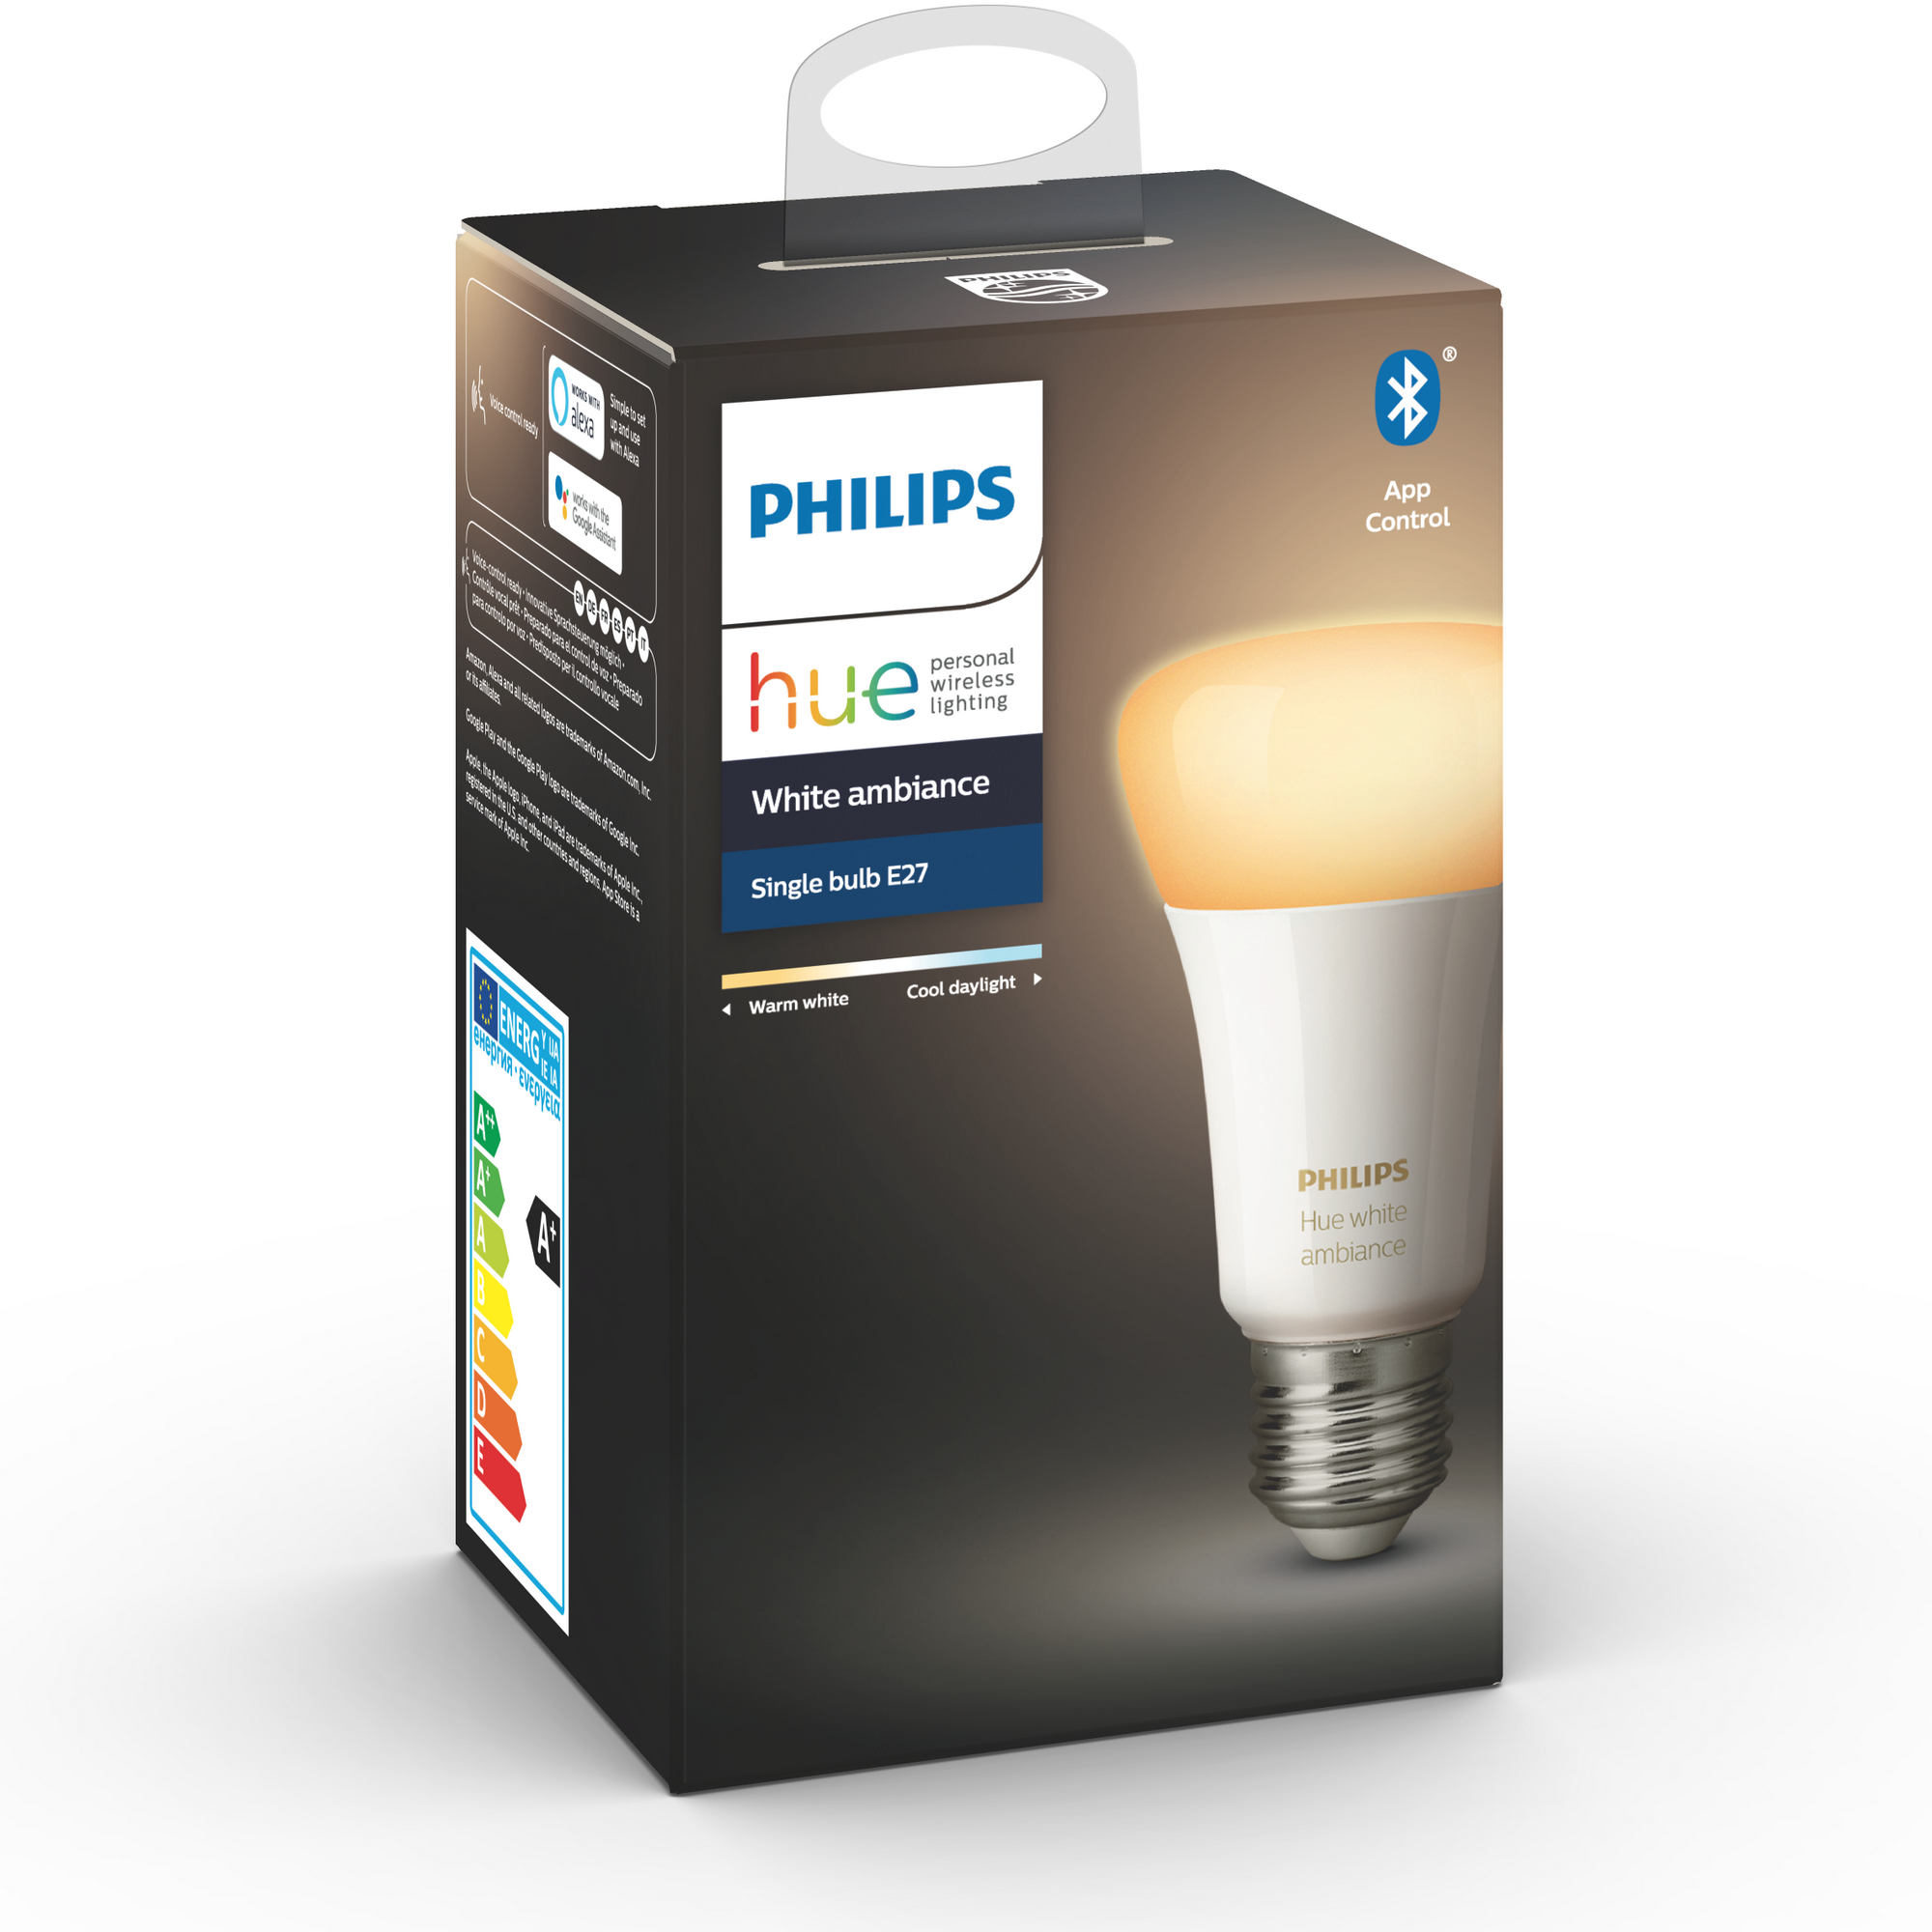 Philips LED-Lampe 'Hue' White Ambiance E27 Einzelpack 9,5W ǀ toom Baumarkt